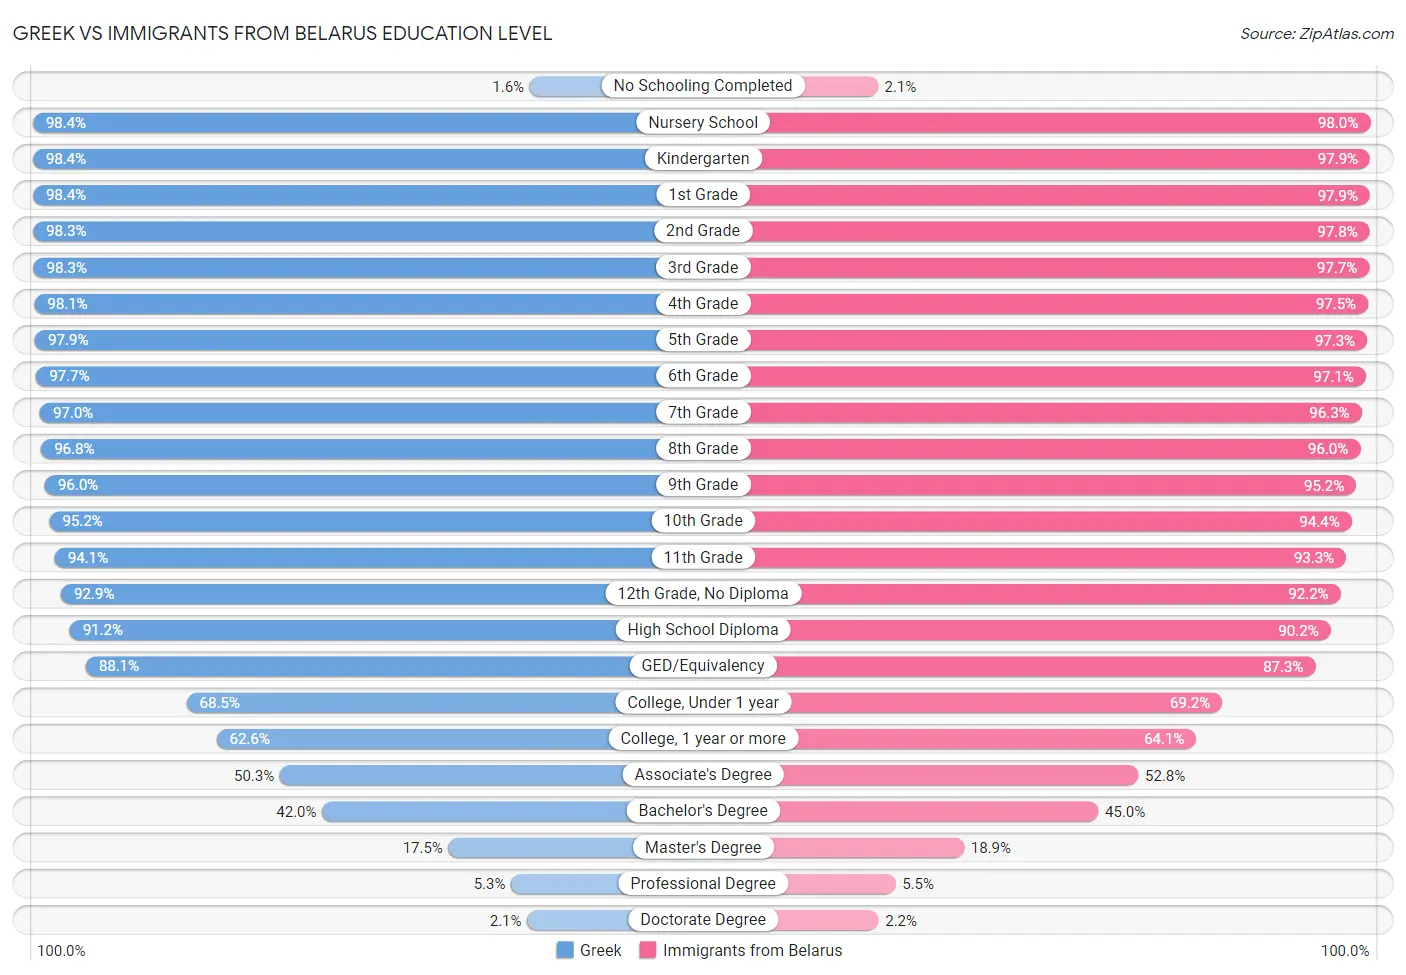 Greek vs Immigrants from Belarus Education Level